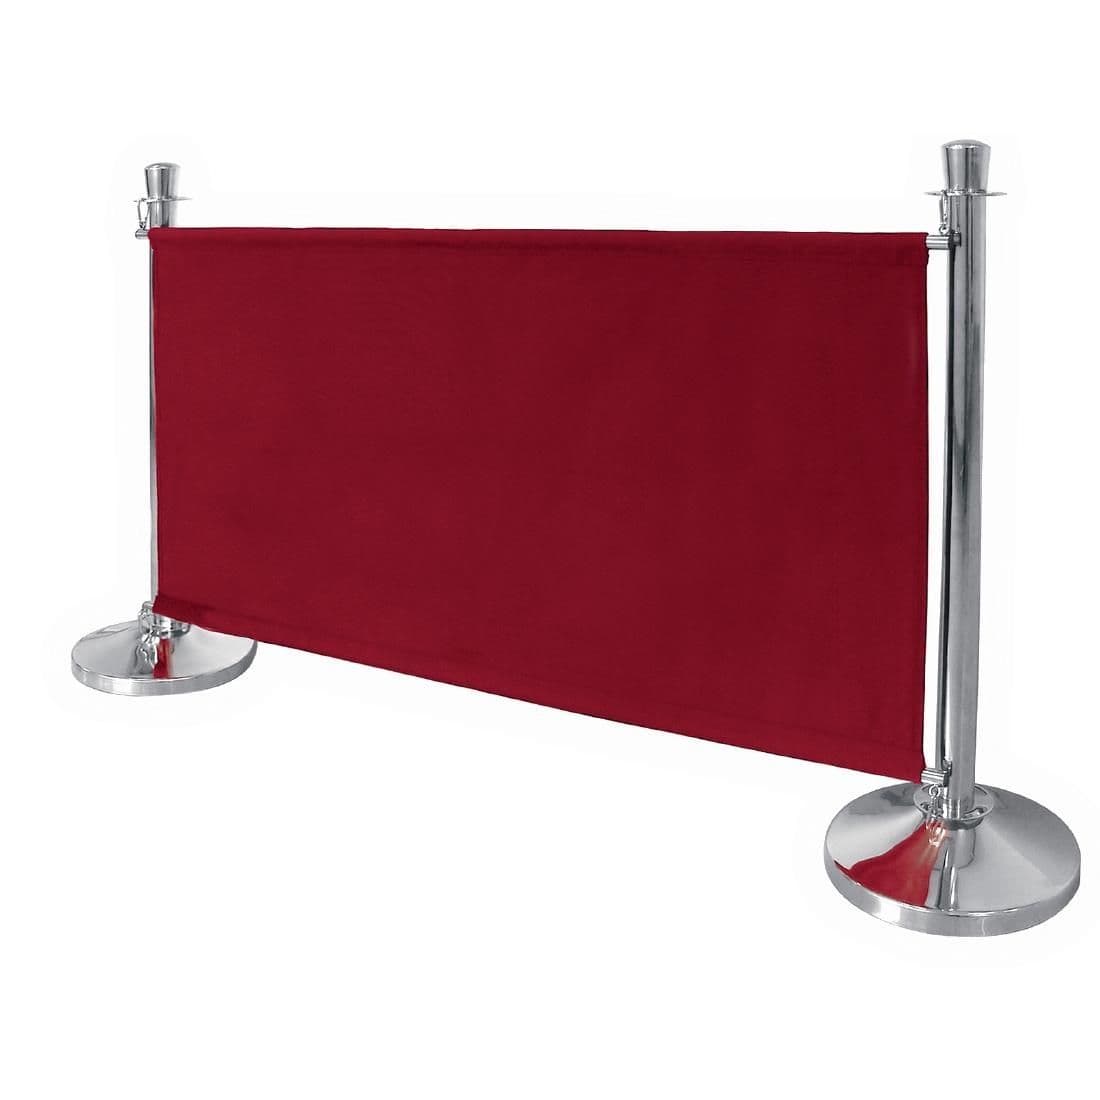 Bolero Red Canvas Barrier JD Catering Equipment Solutions Ltd